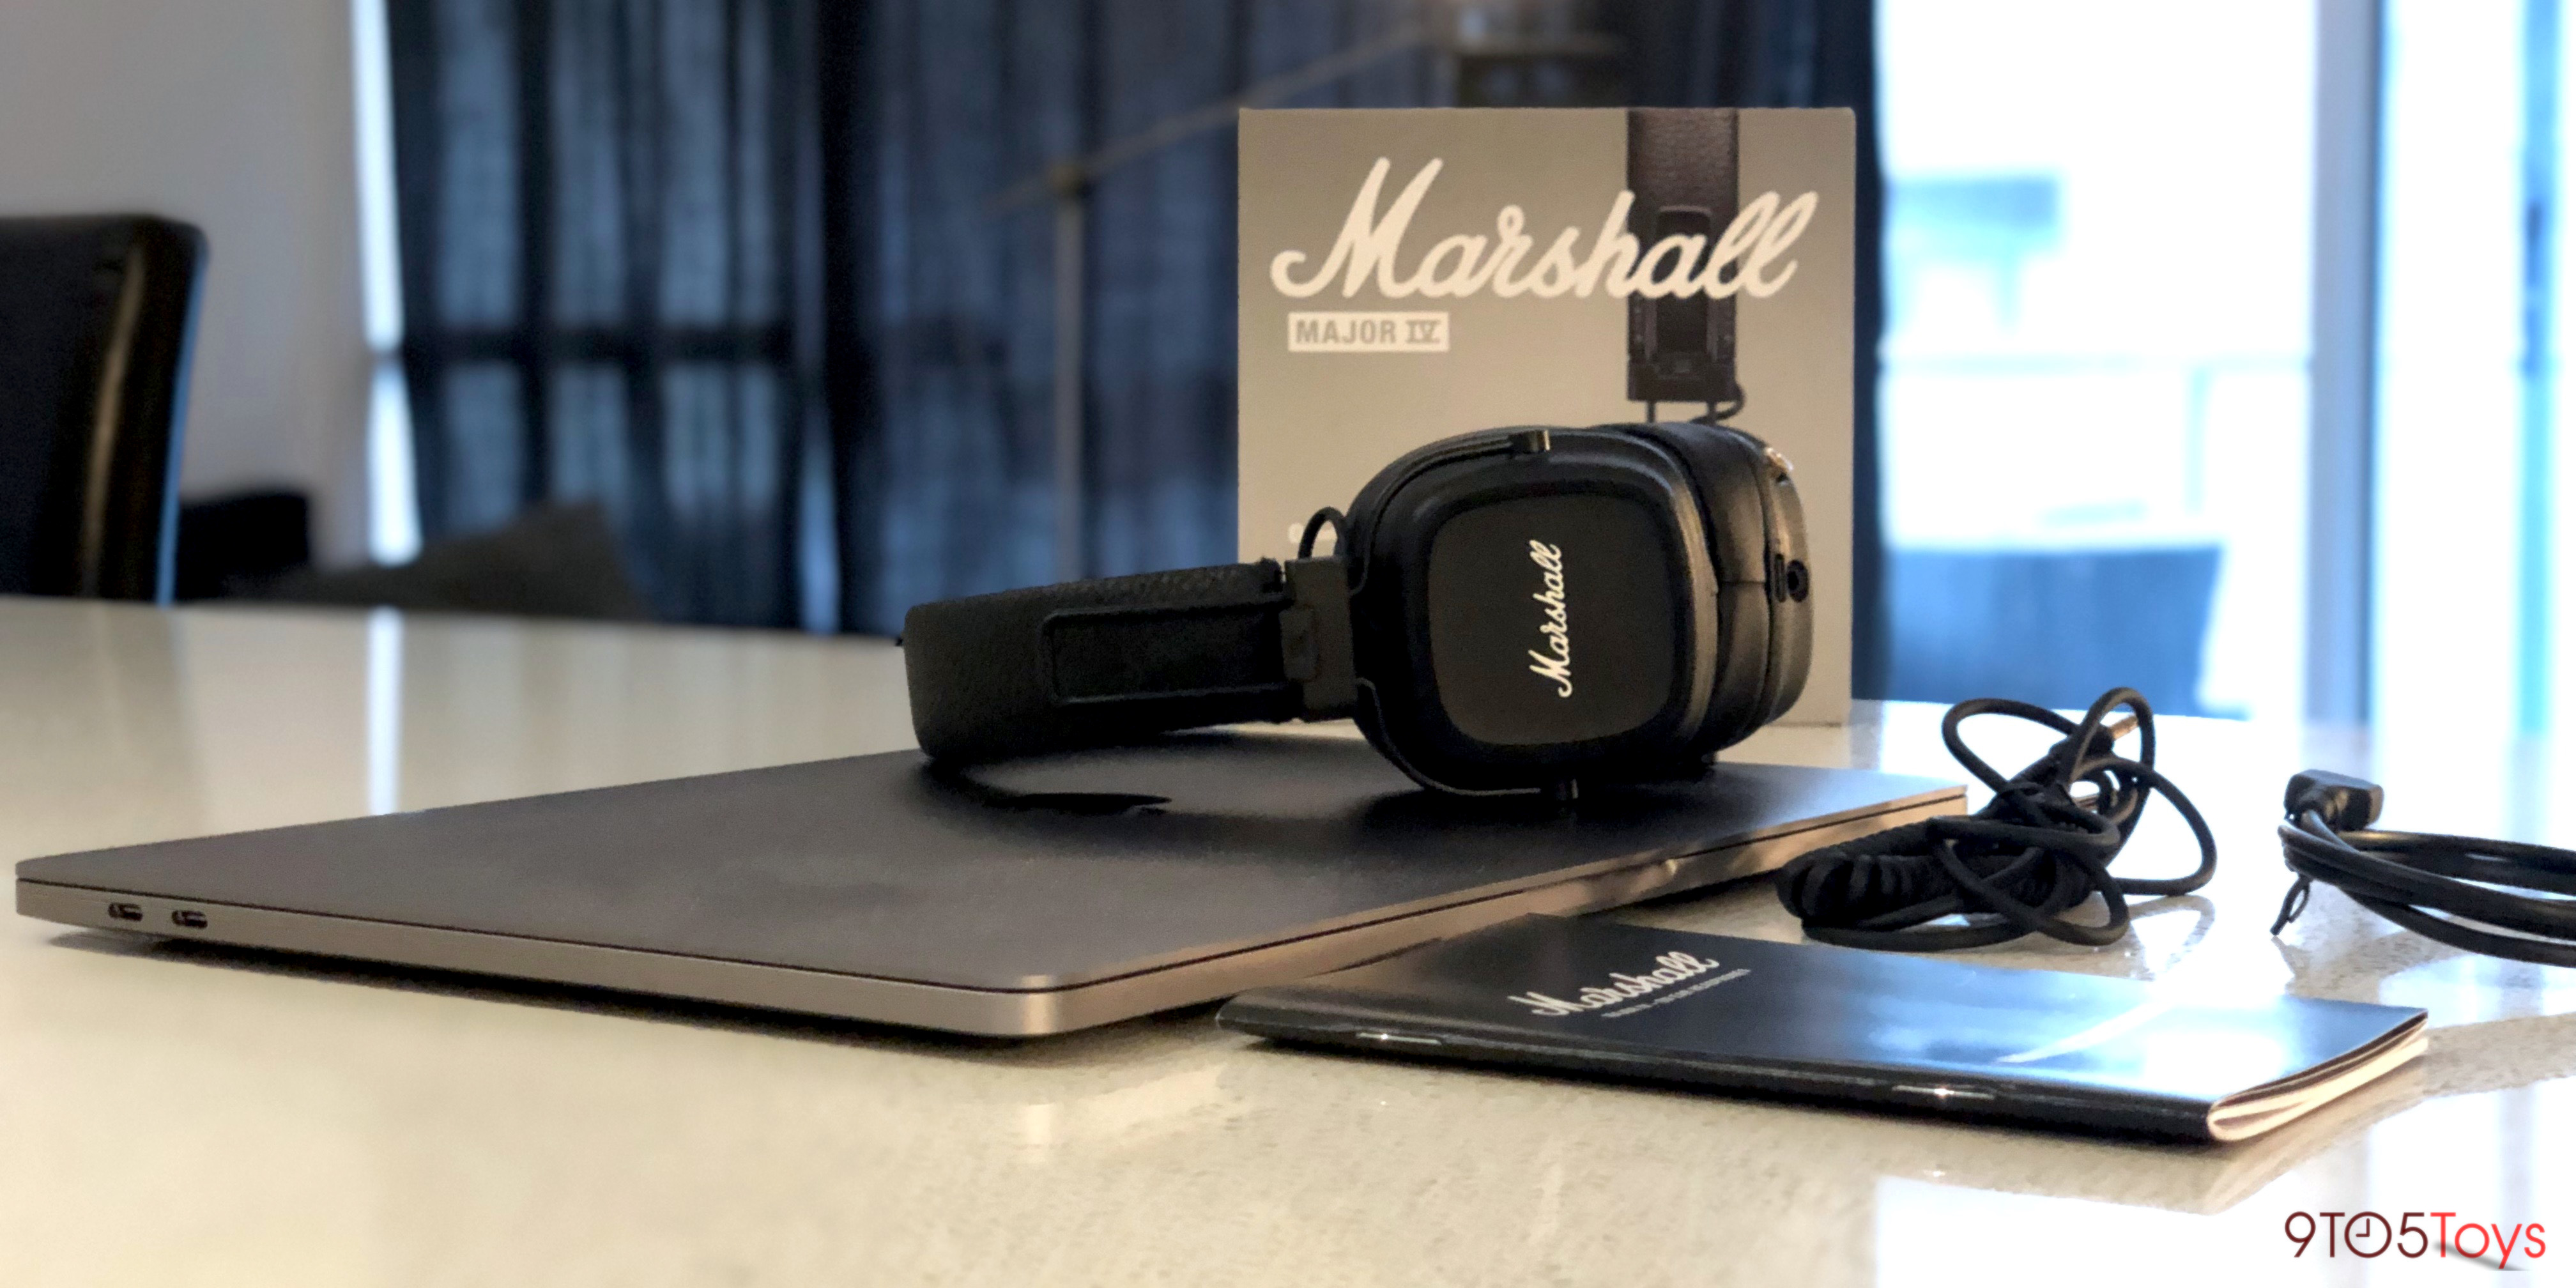 Marshall Major IV wireless headphones review 